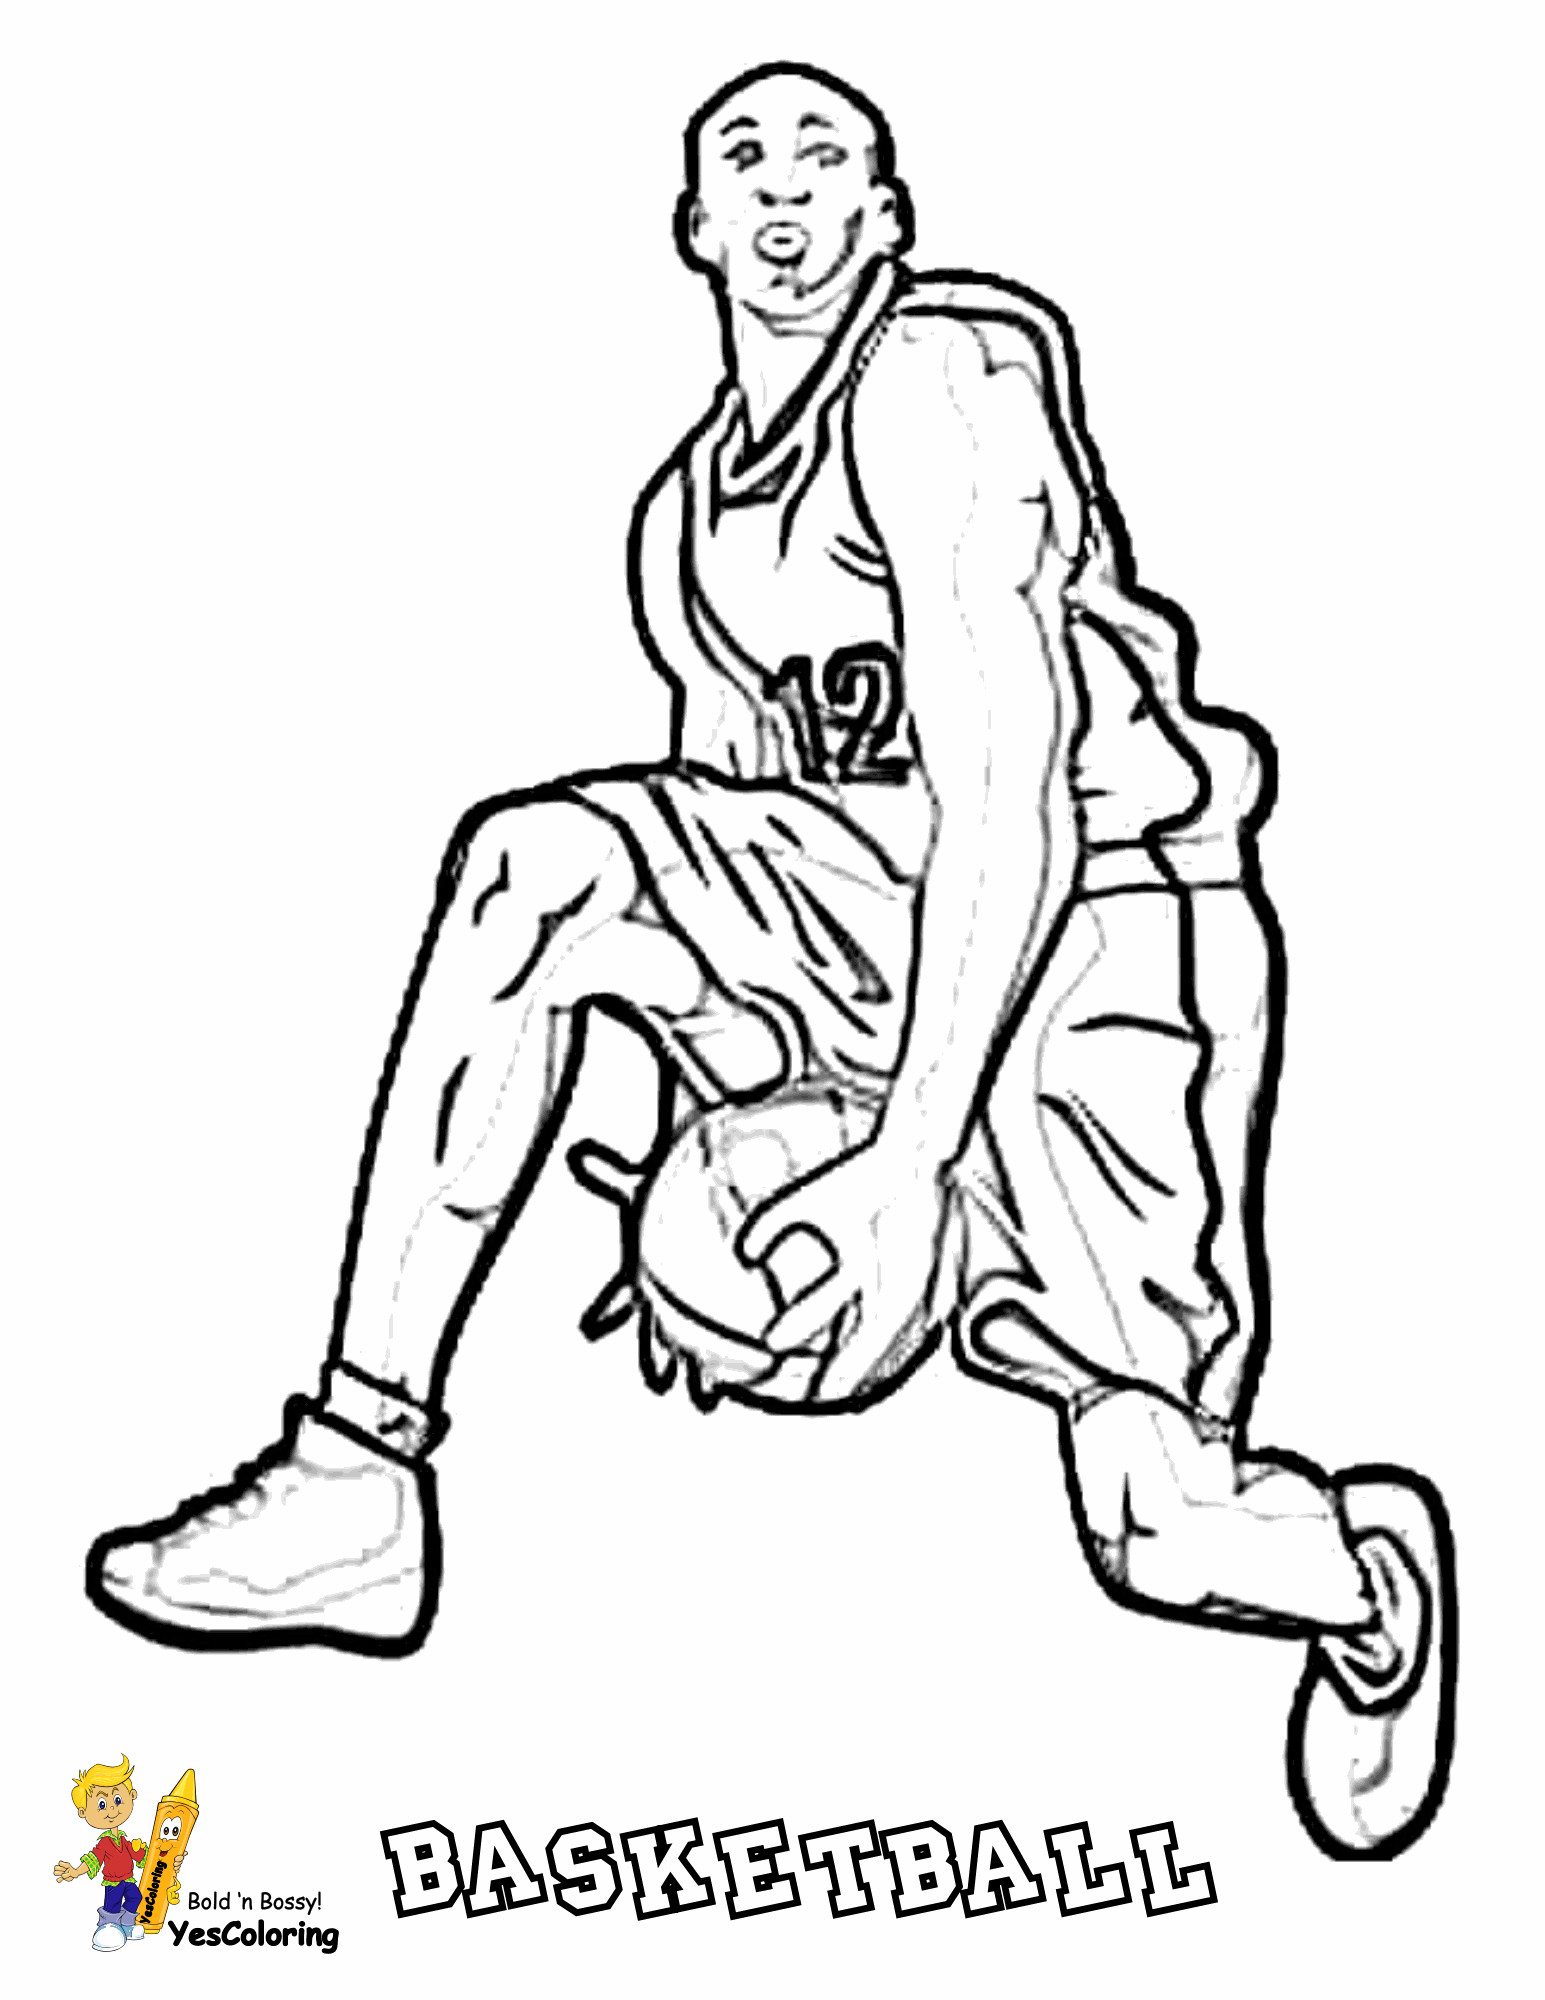 Basketball Player Coloring Pages
 Big Boss Basketball Coloring